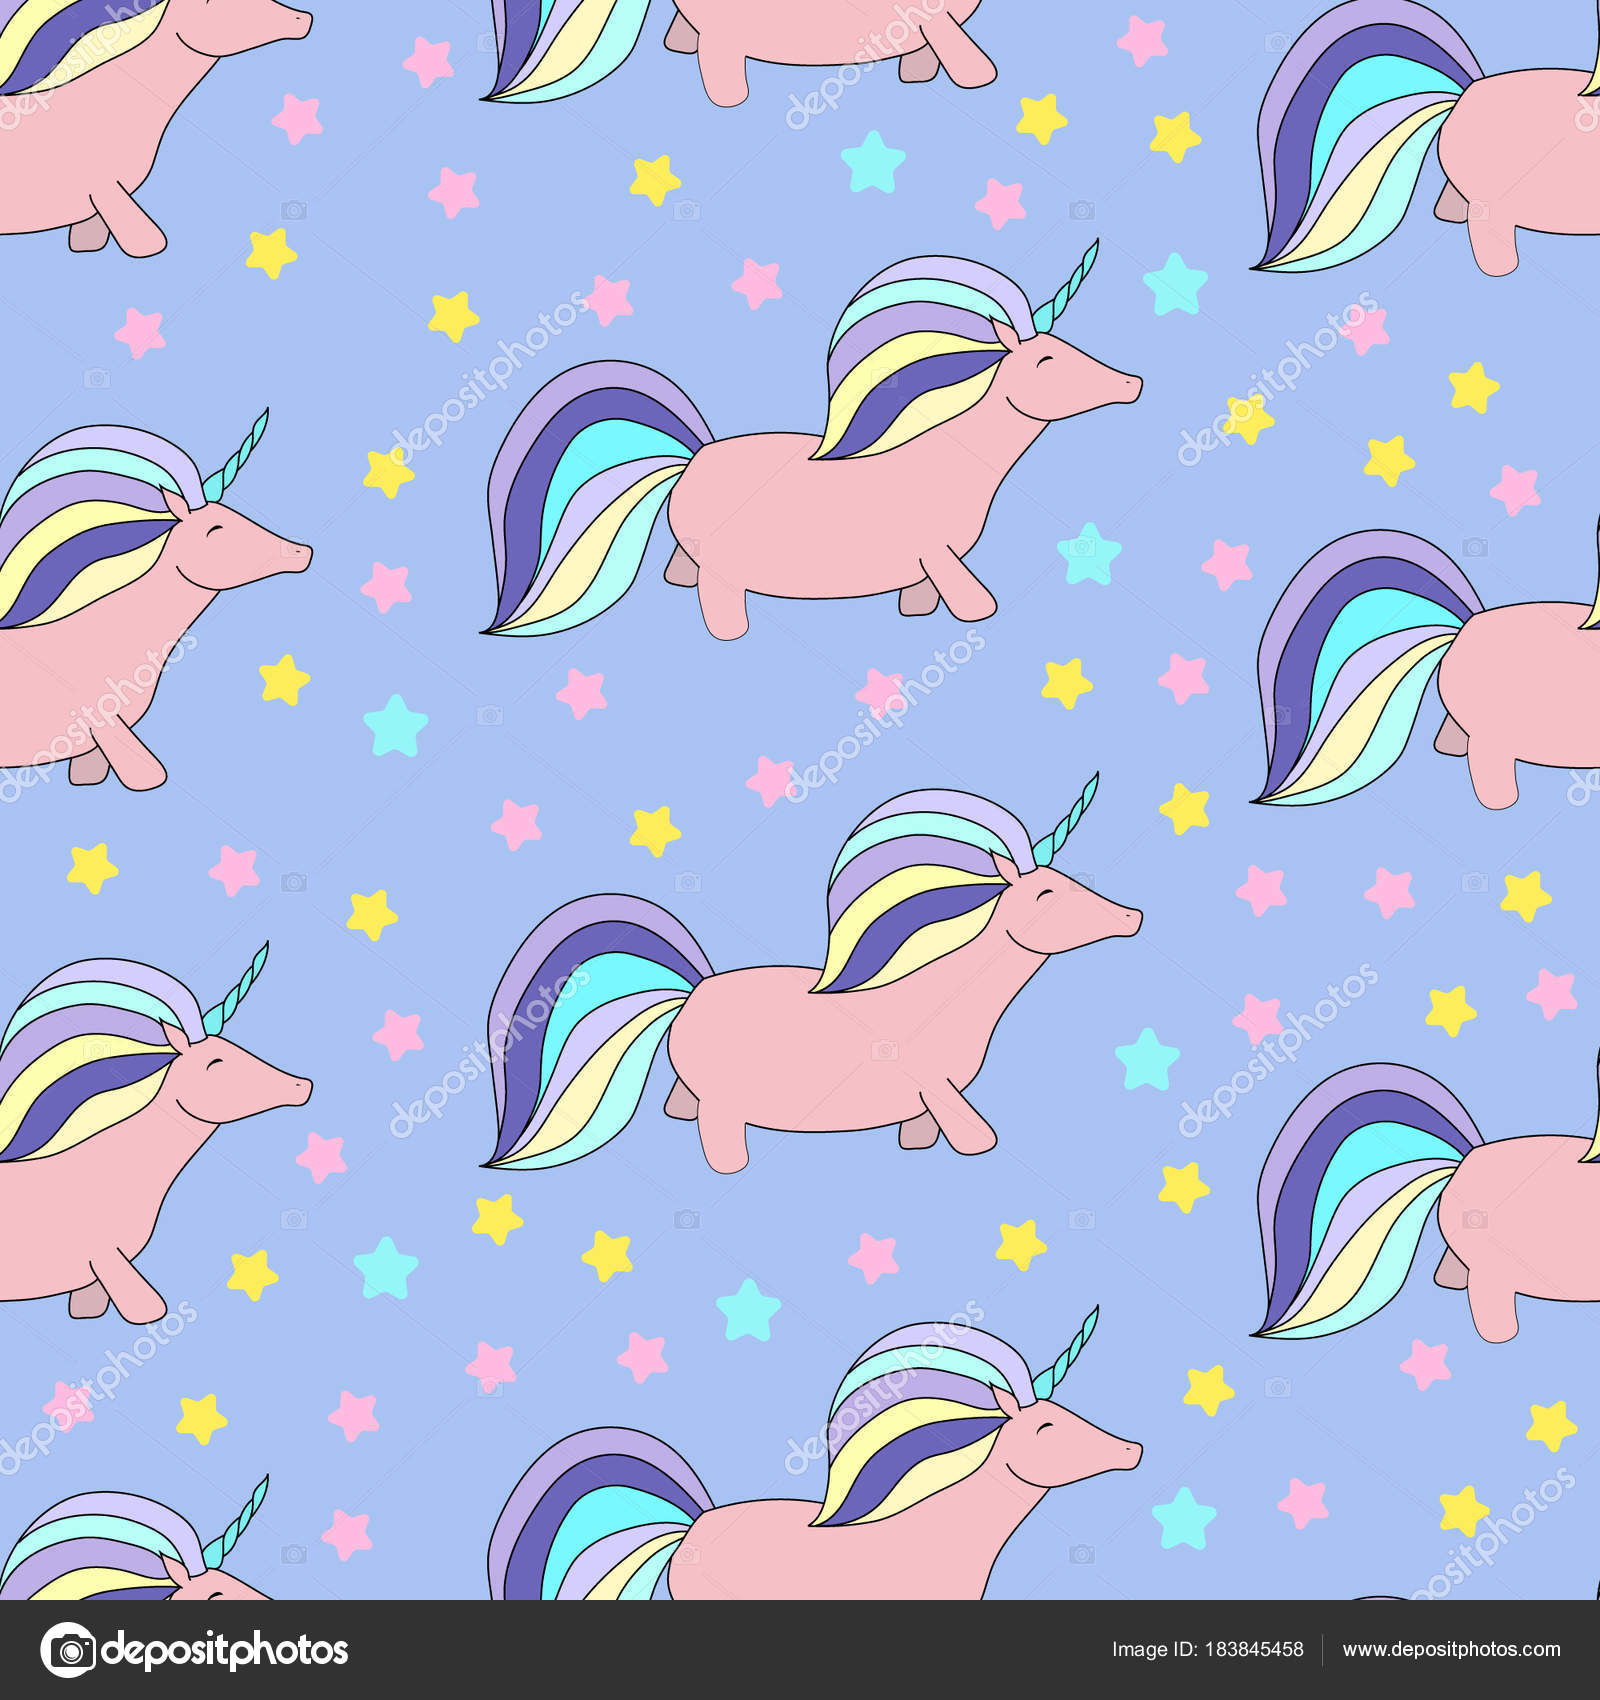 Featured image of post Background Unicornio Fondos Iconos de unicornio vominitg en otros estilos